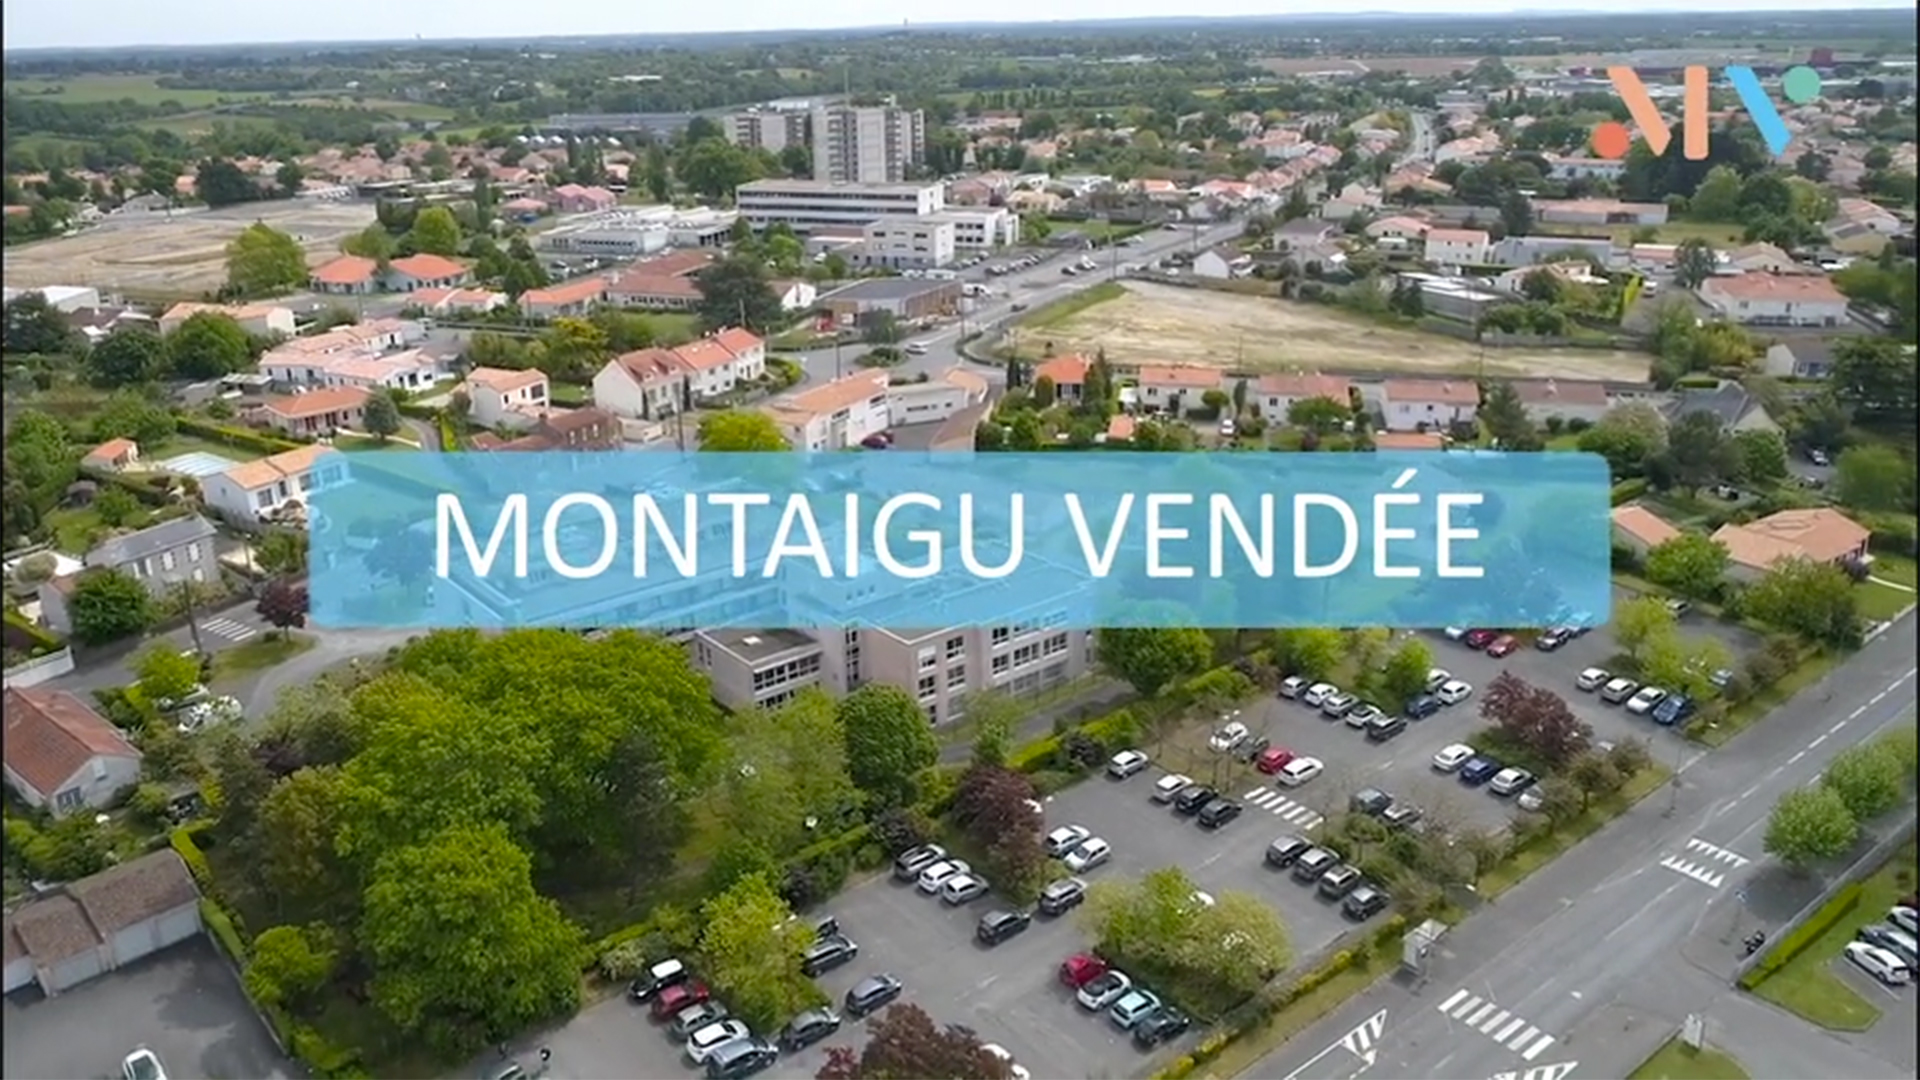 Montaigu Vendée Vœux 2020